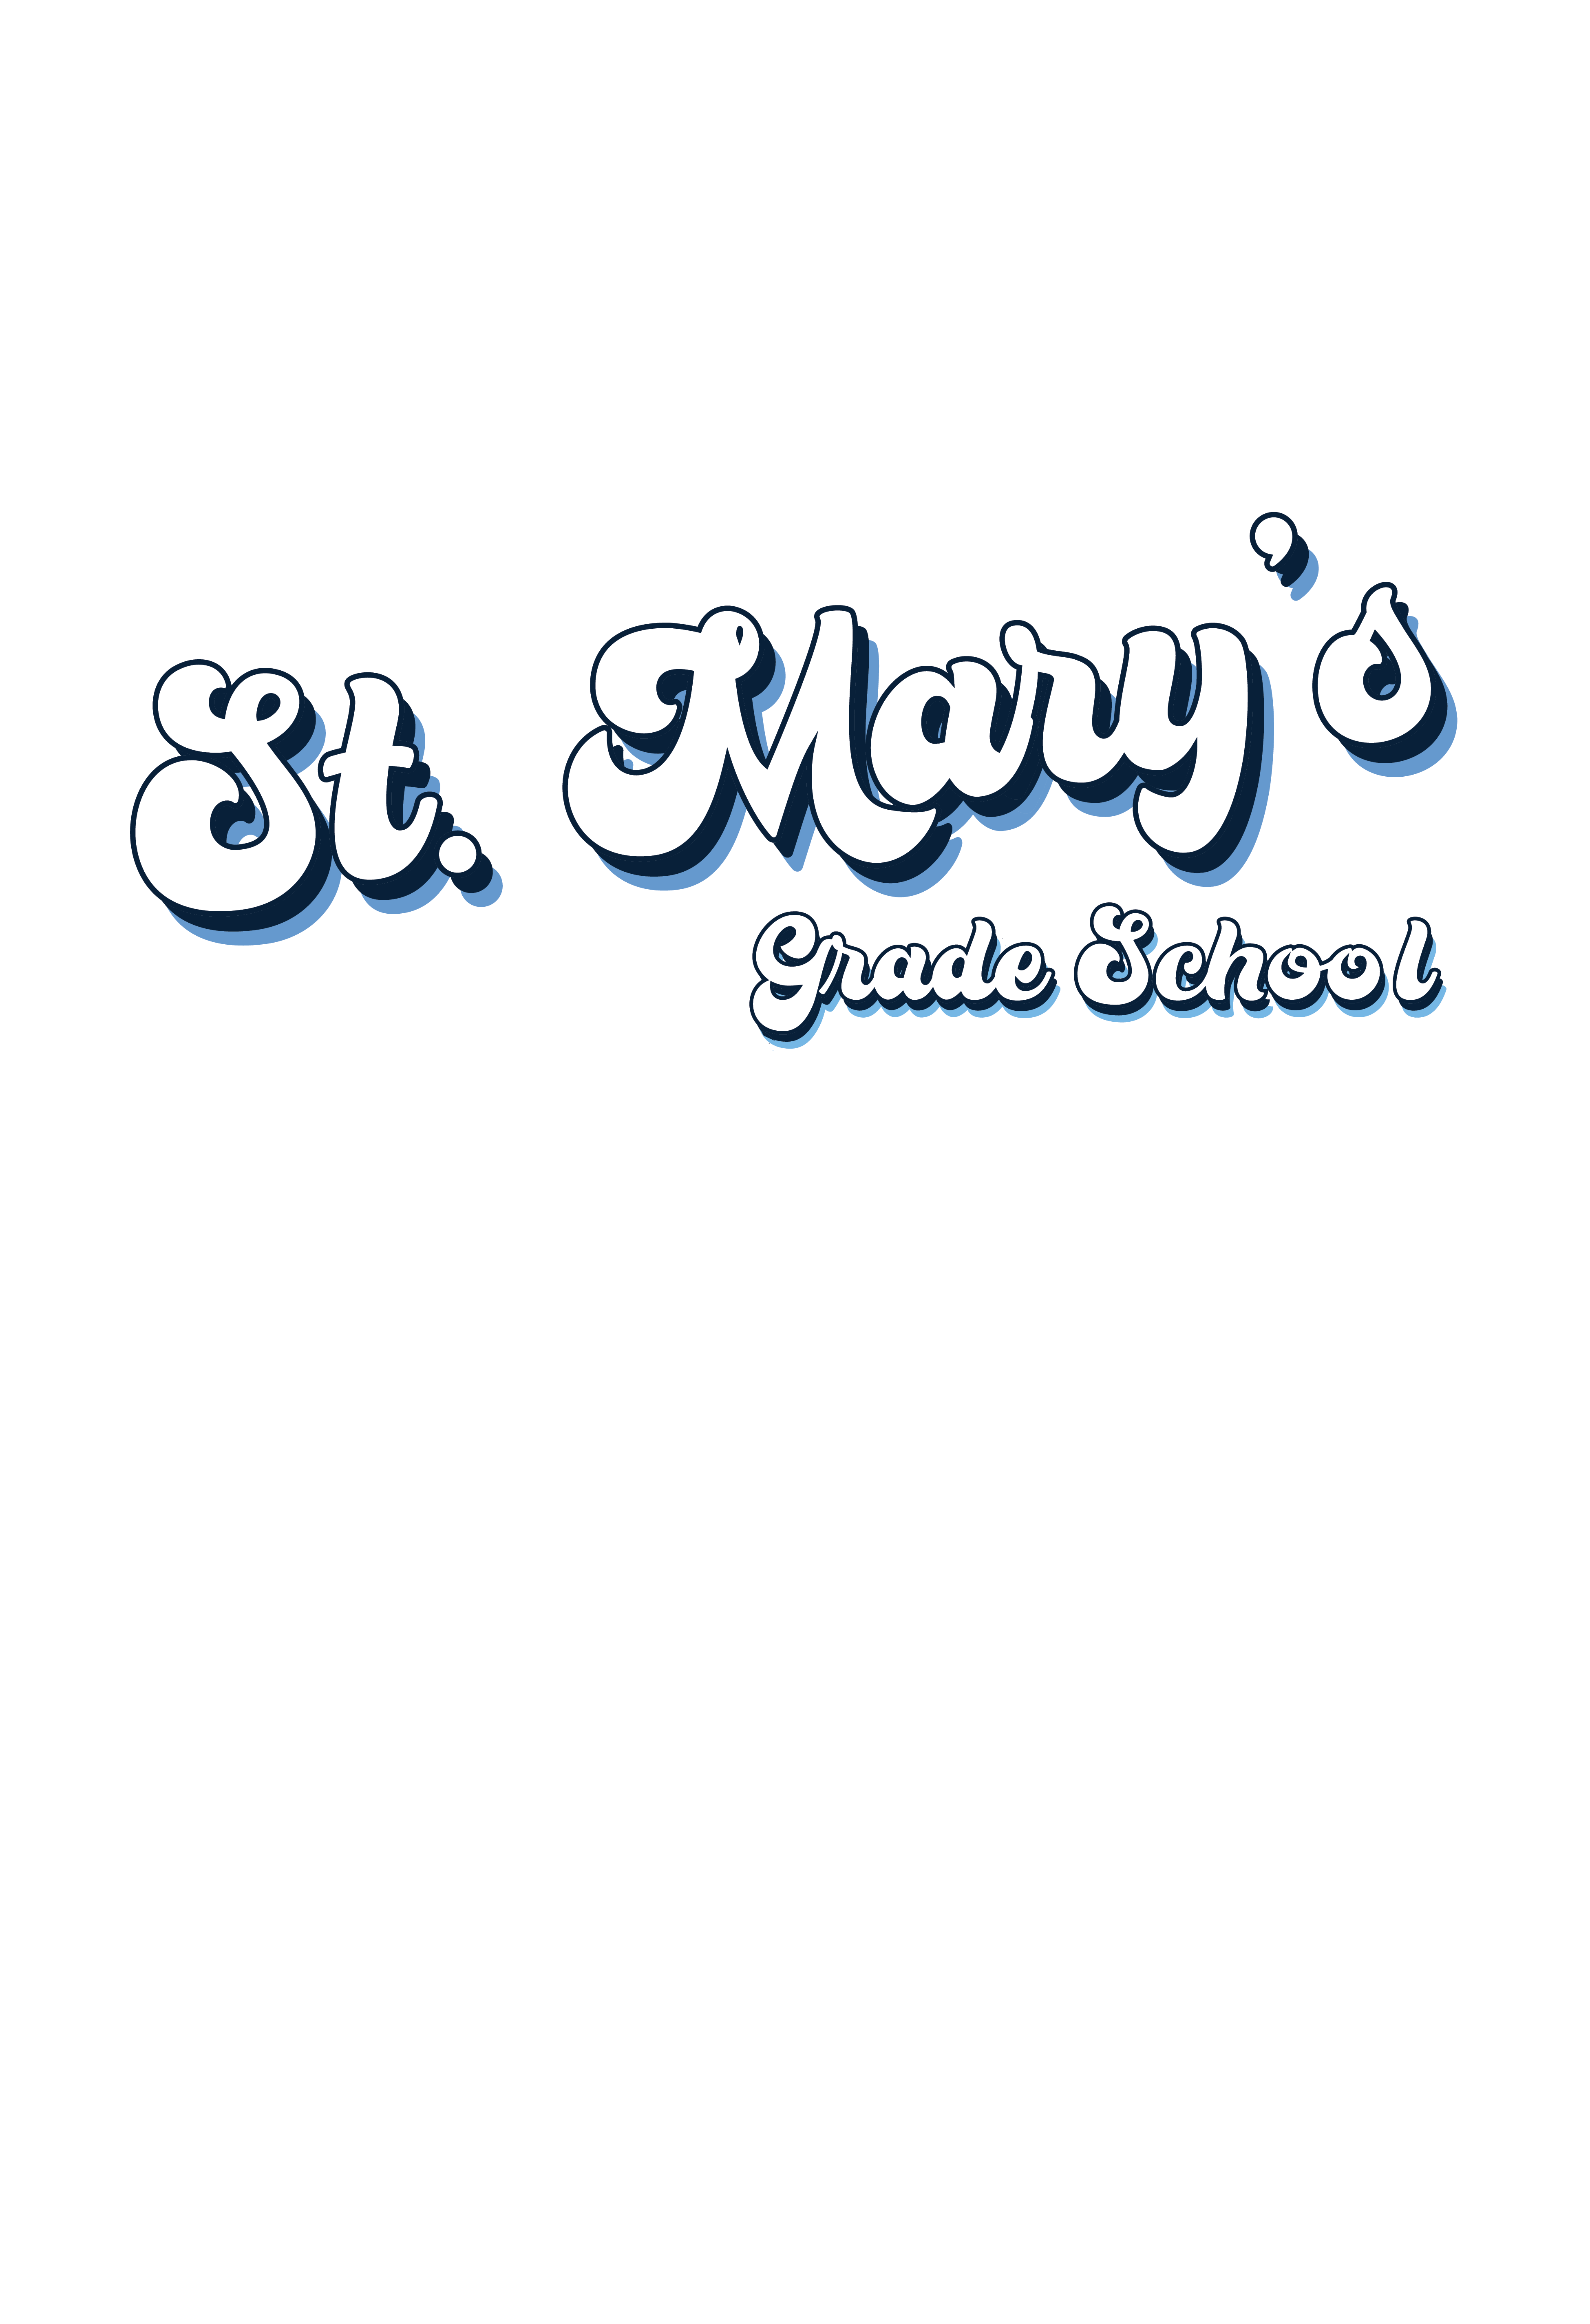 St. Mary's Grade School (10506)